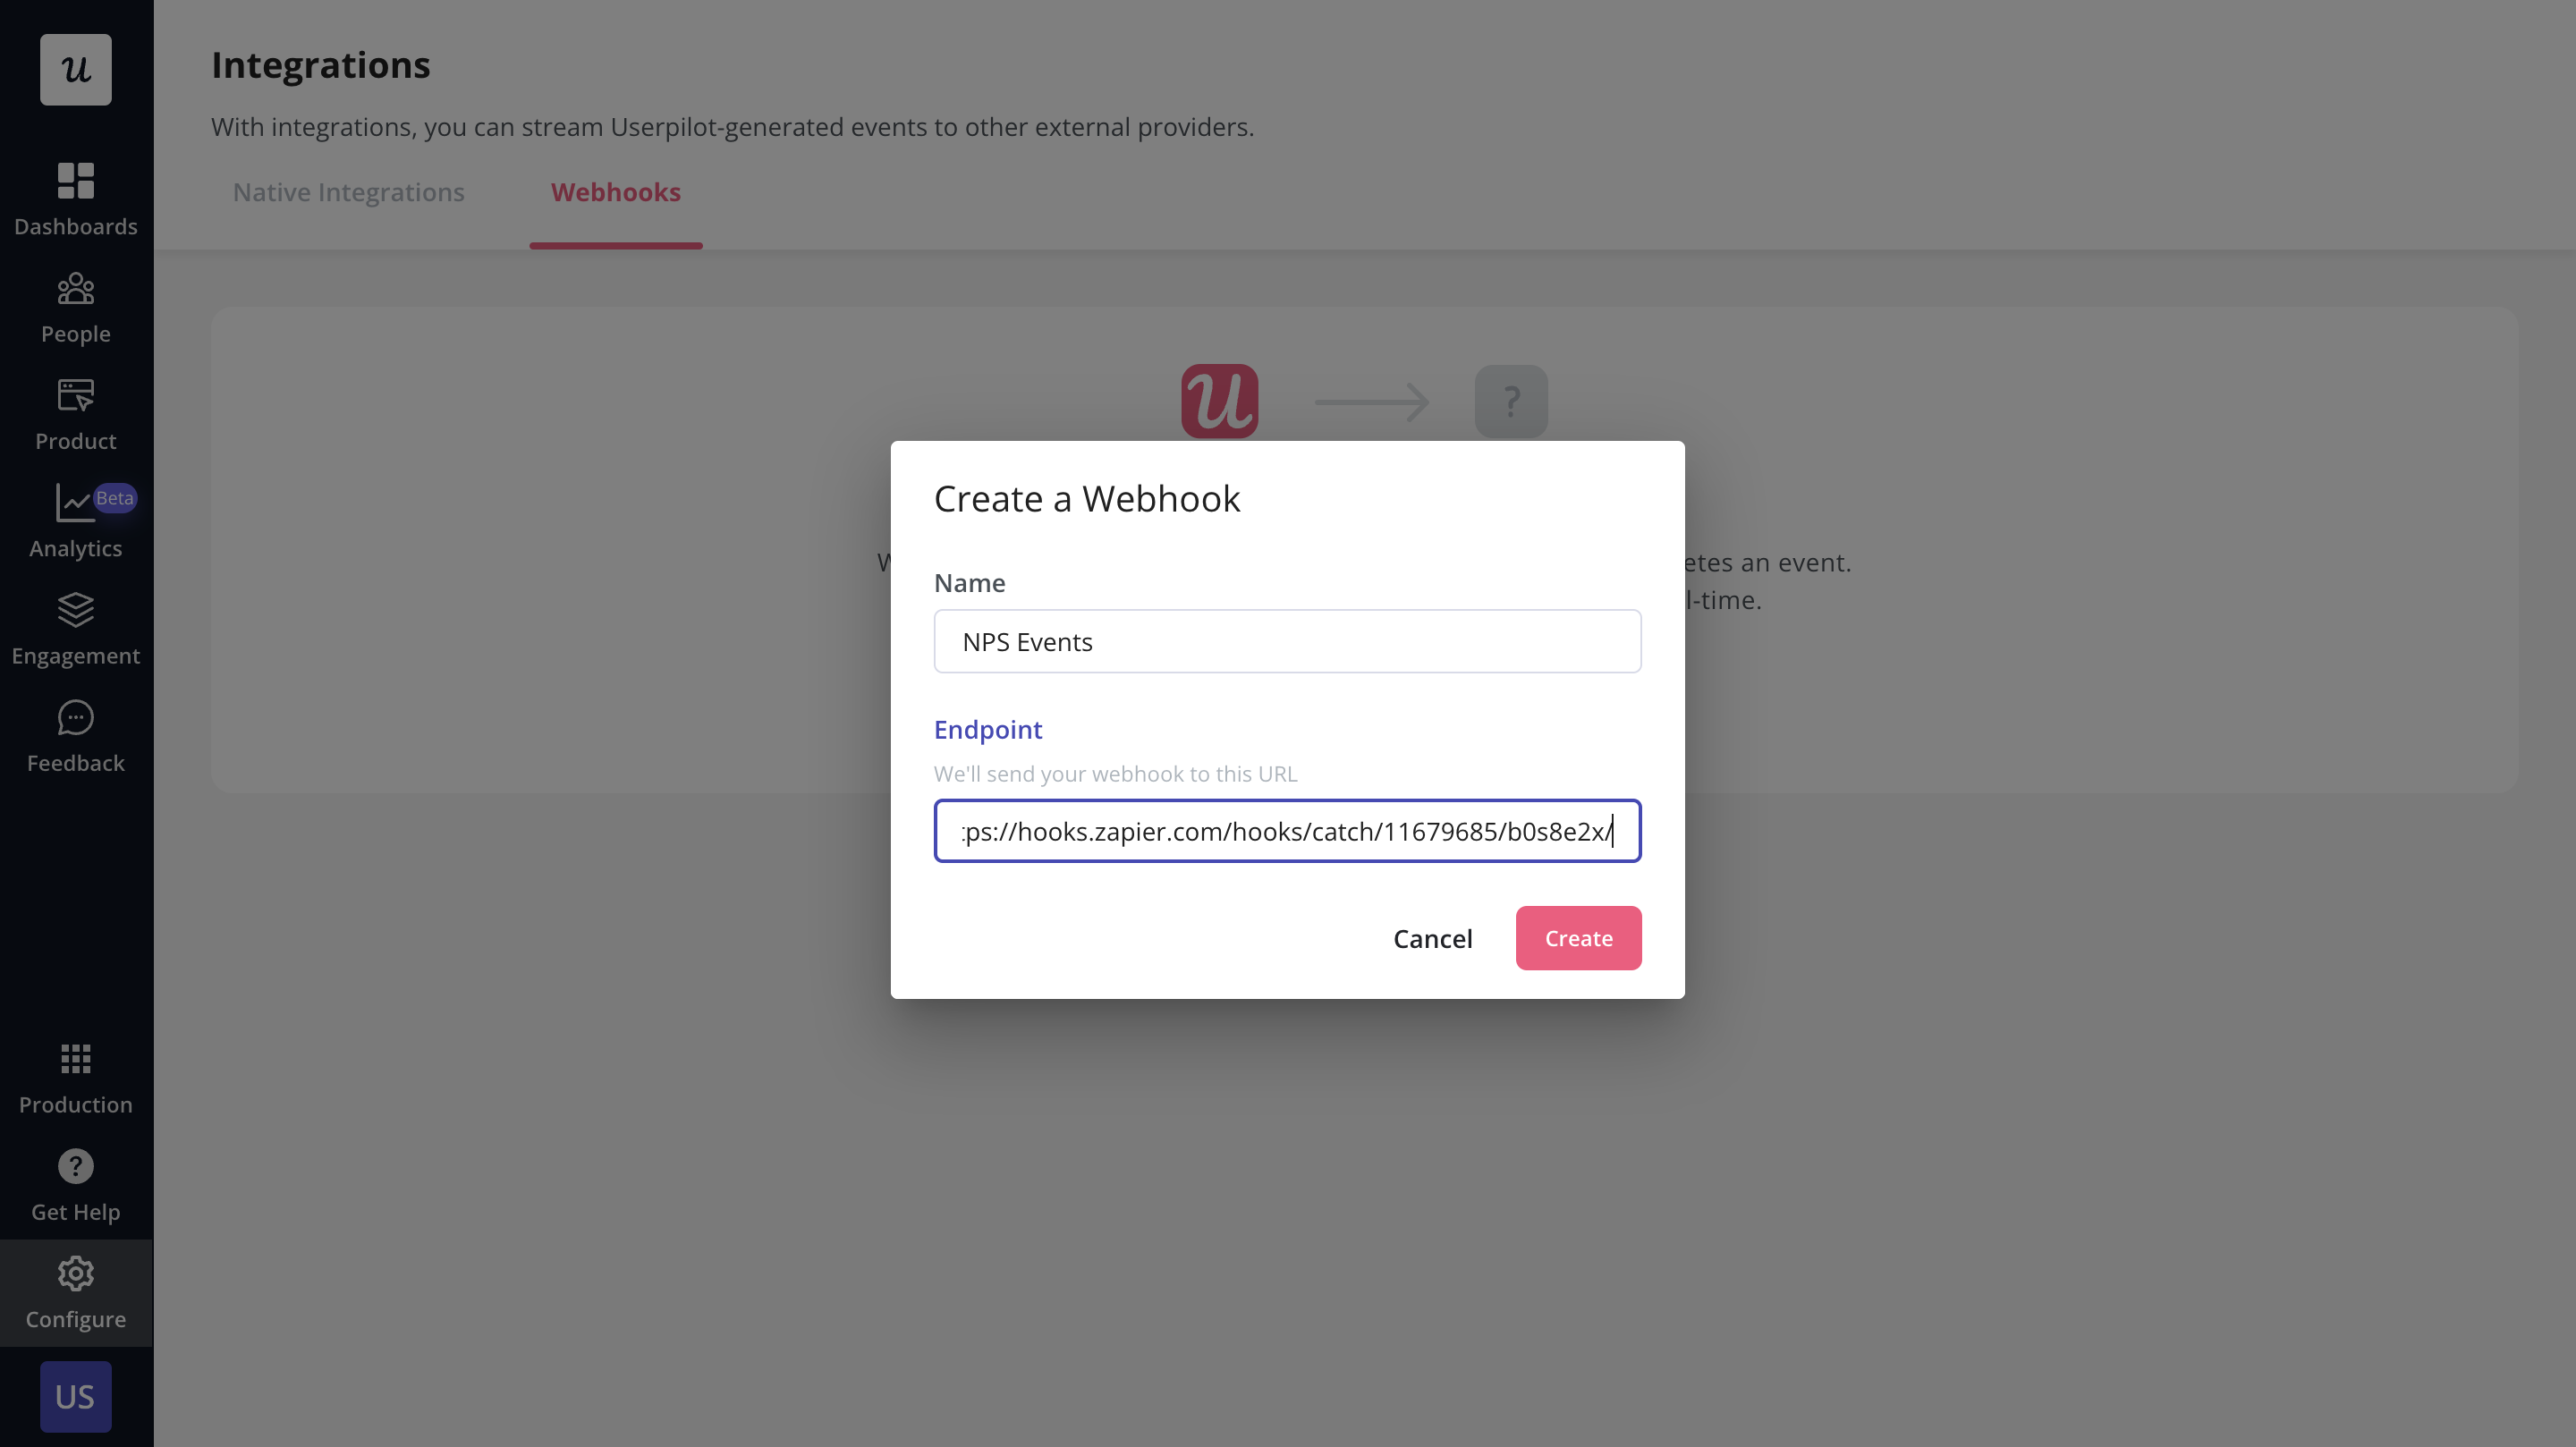 Creating a Webhook in Userpilot